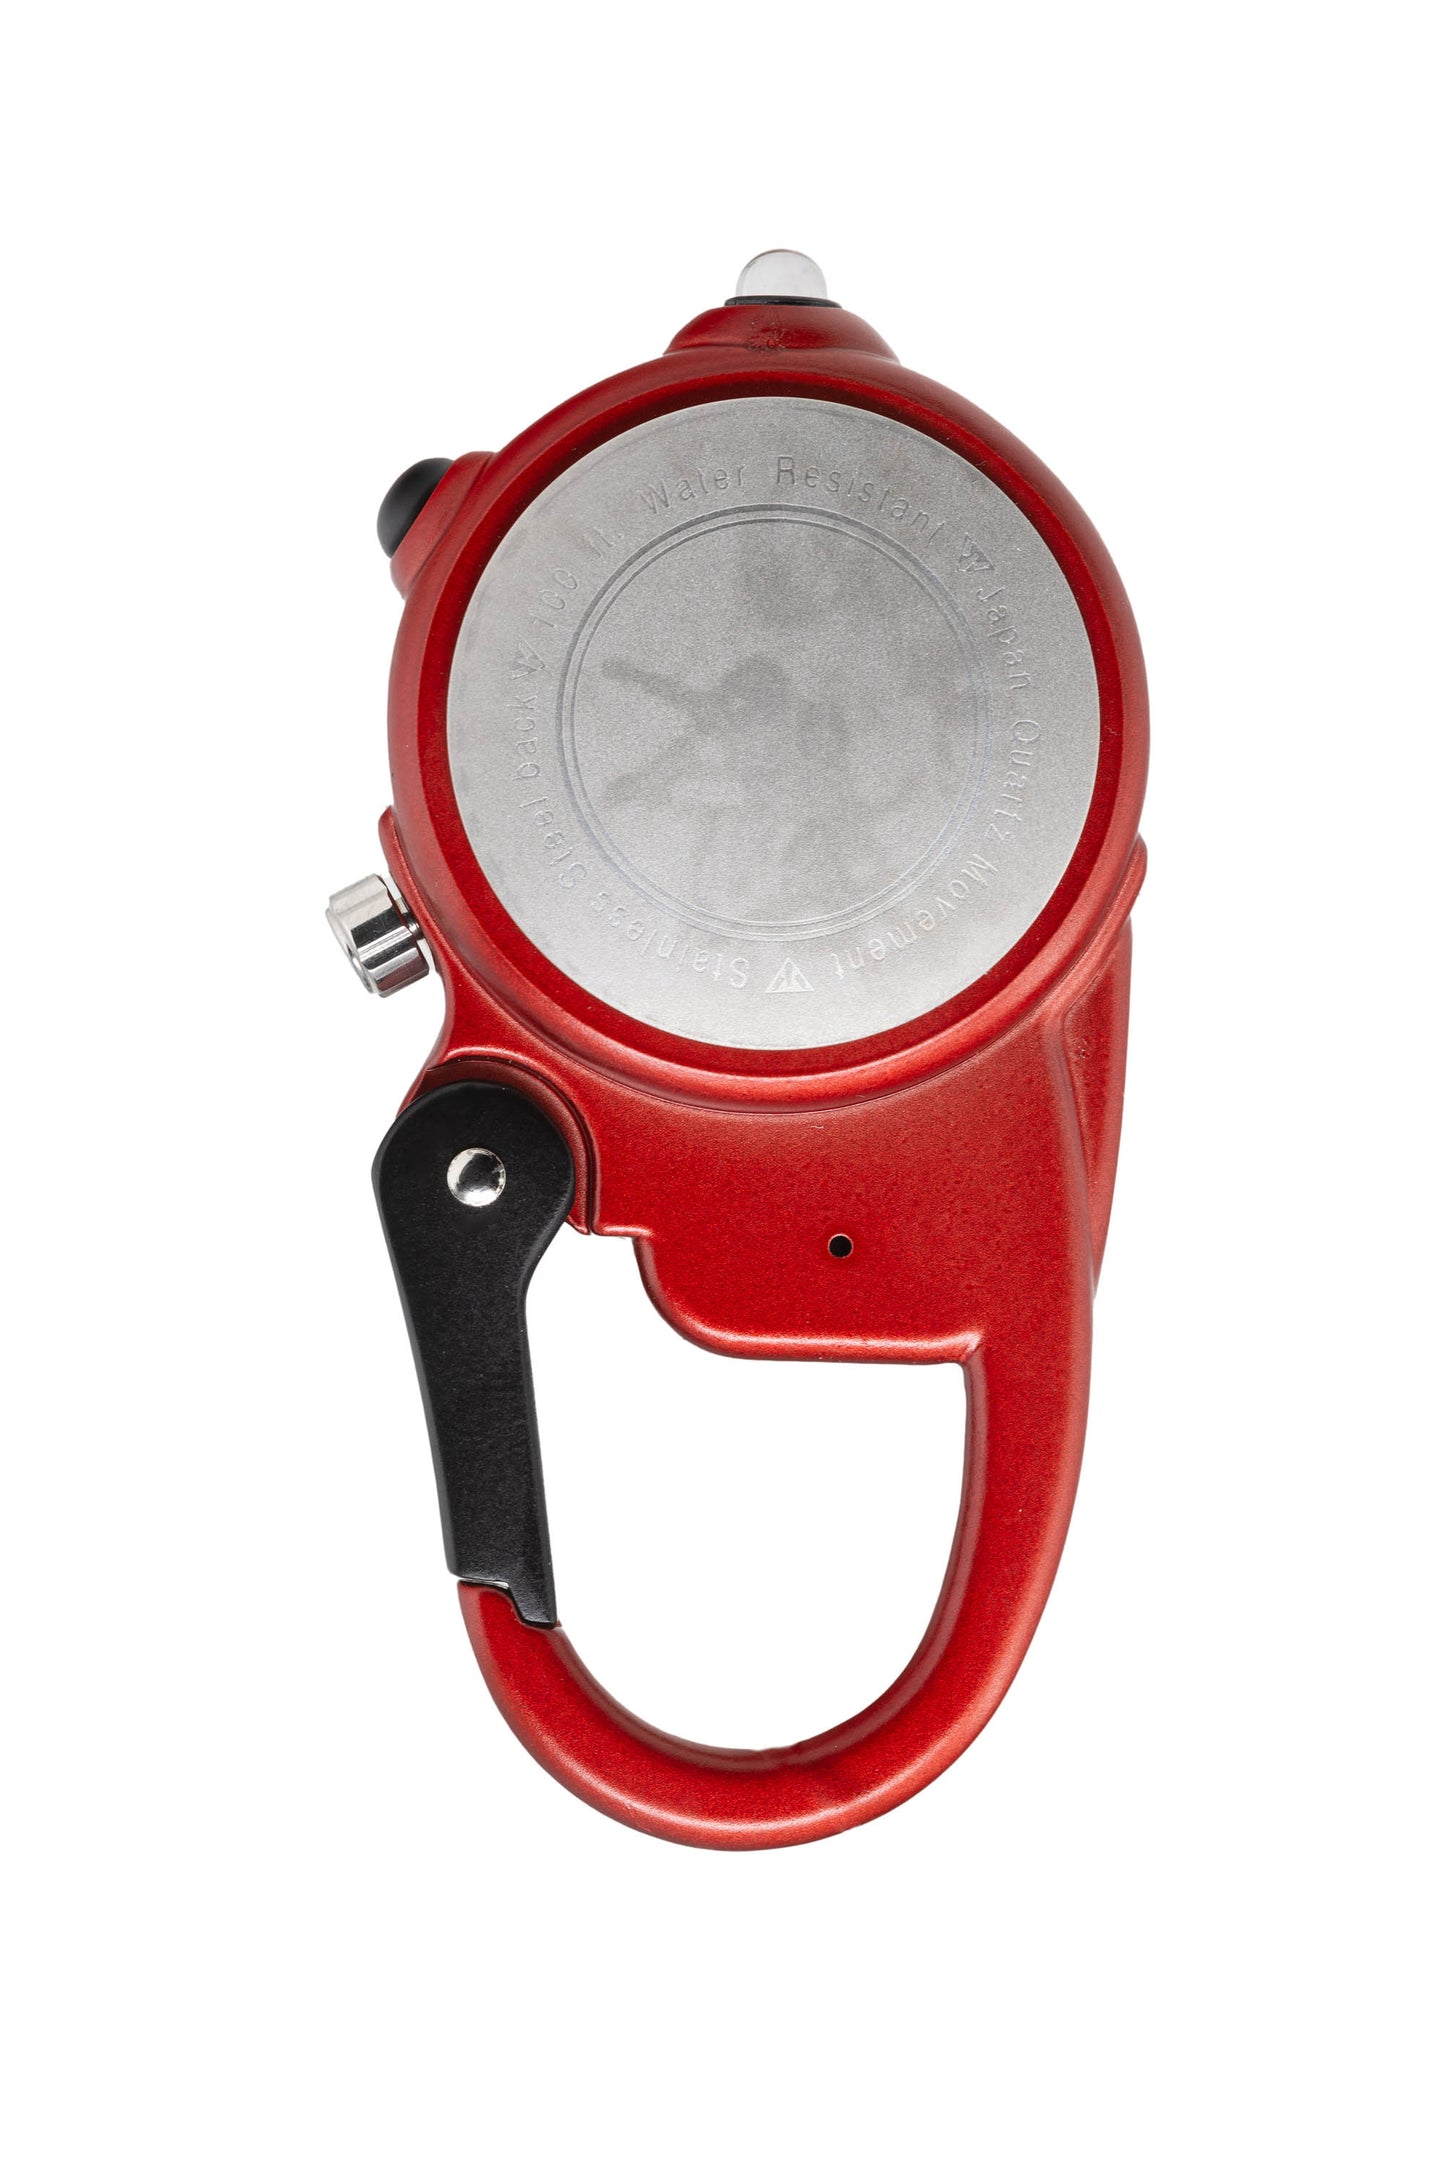 Miniclip Microlight - Red Case White Dial